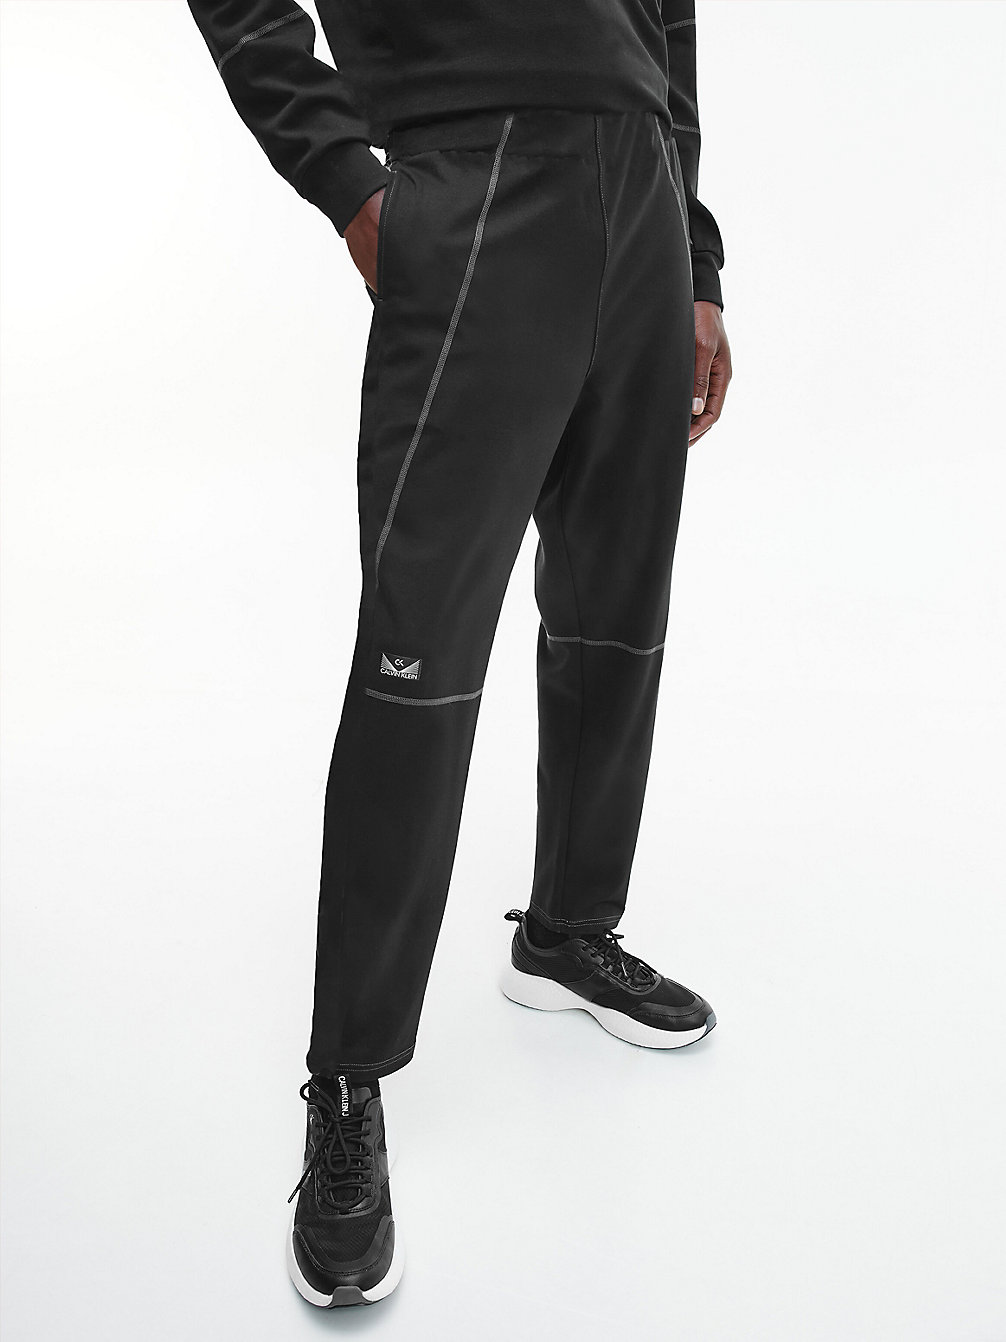 CK BLACK/ PERISCOPE/ STONE GREY Pantalon De Jogging Comfort Stretch undefined hommes Calvin Klein